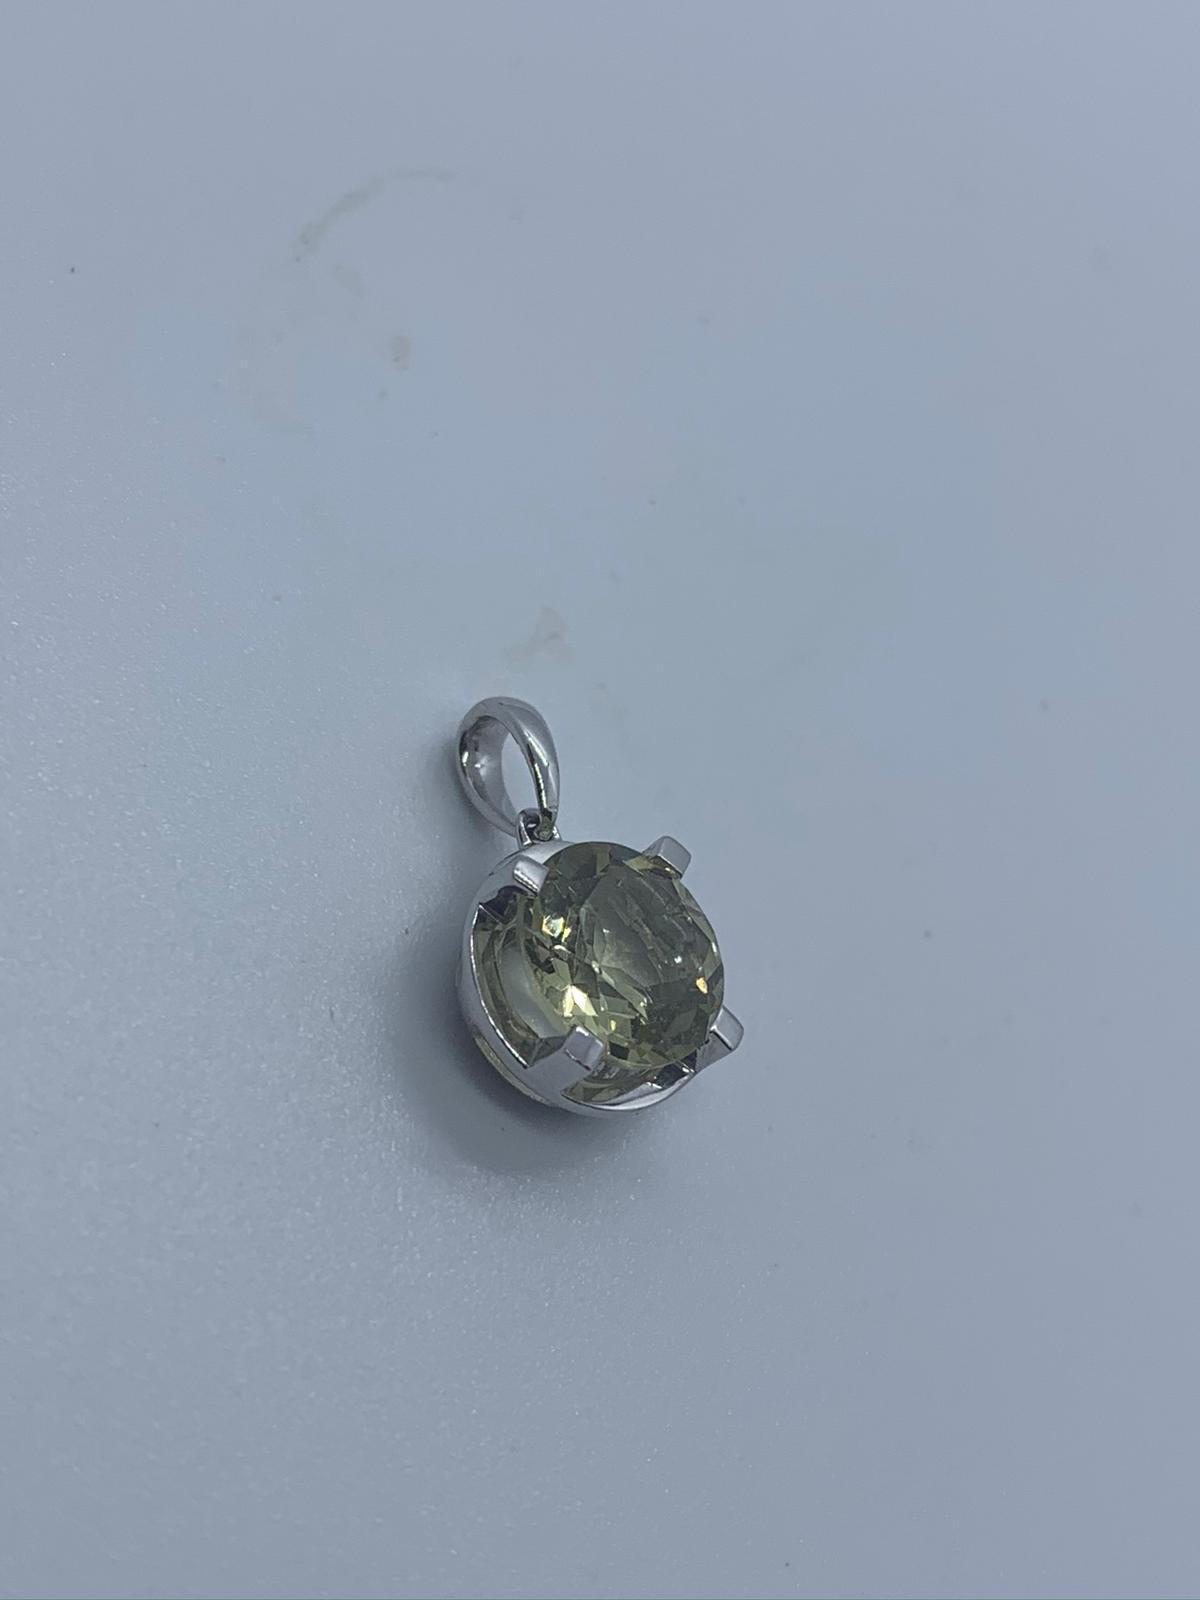 9ct white gold pendant - Image 2 of 2